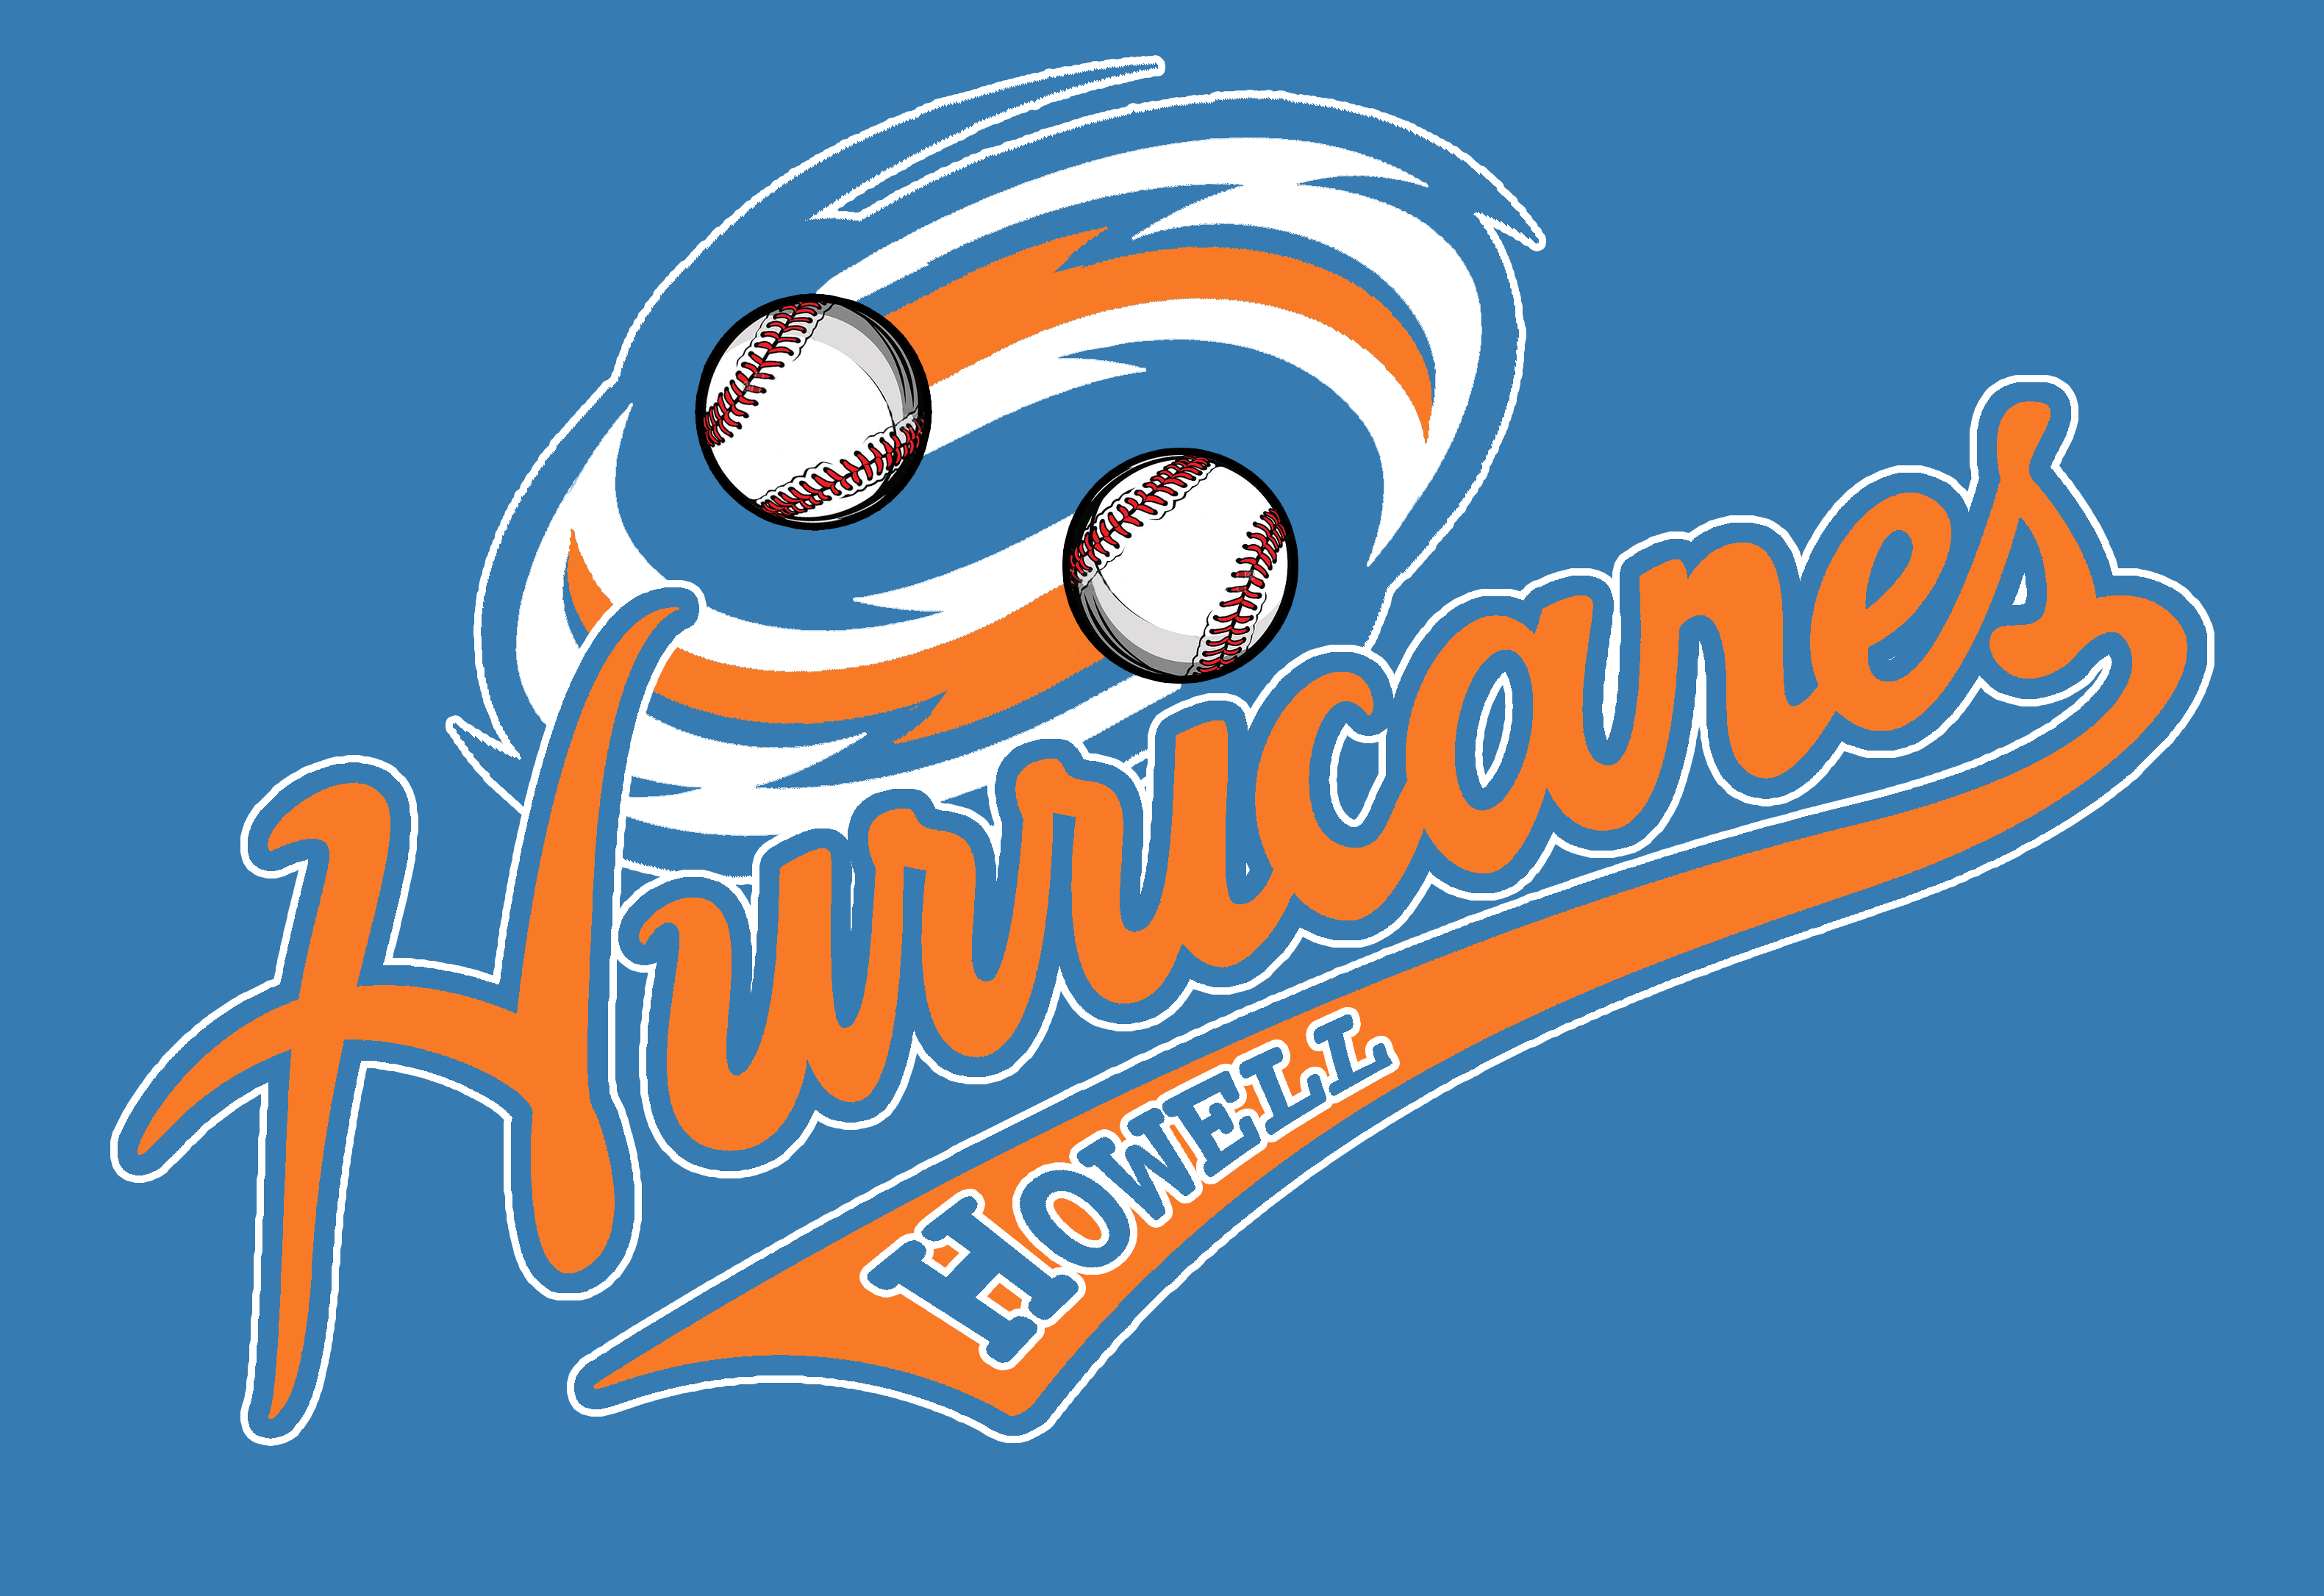 Hurricanes Baseball Logo - Howell Hurricanes baseball - Home